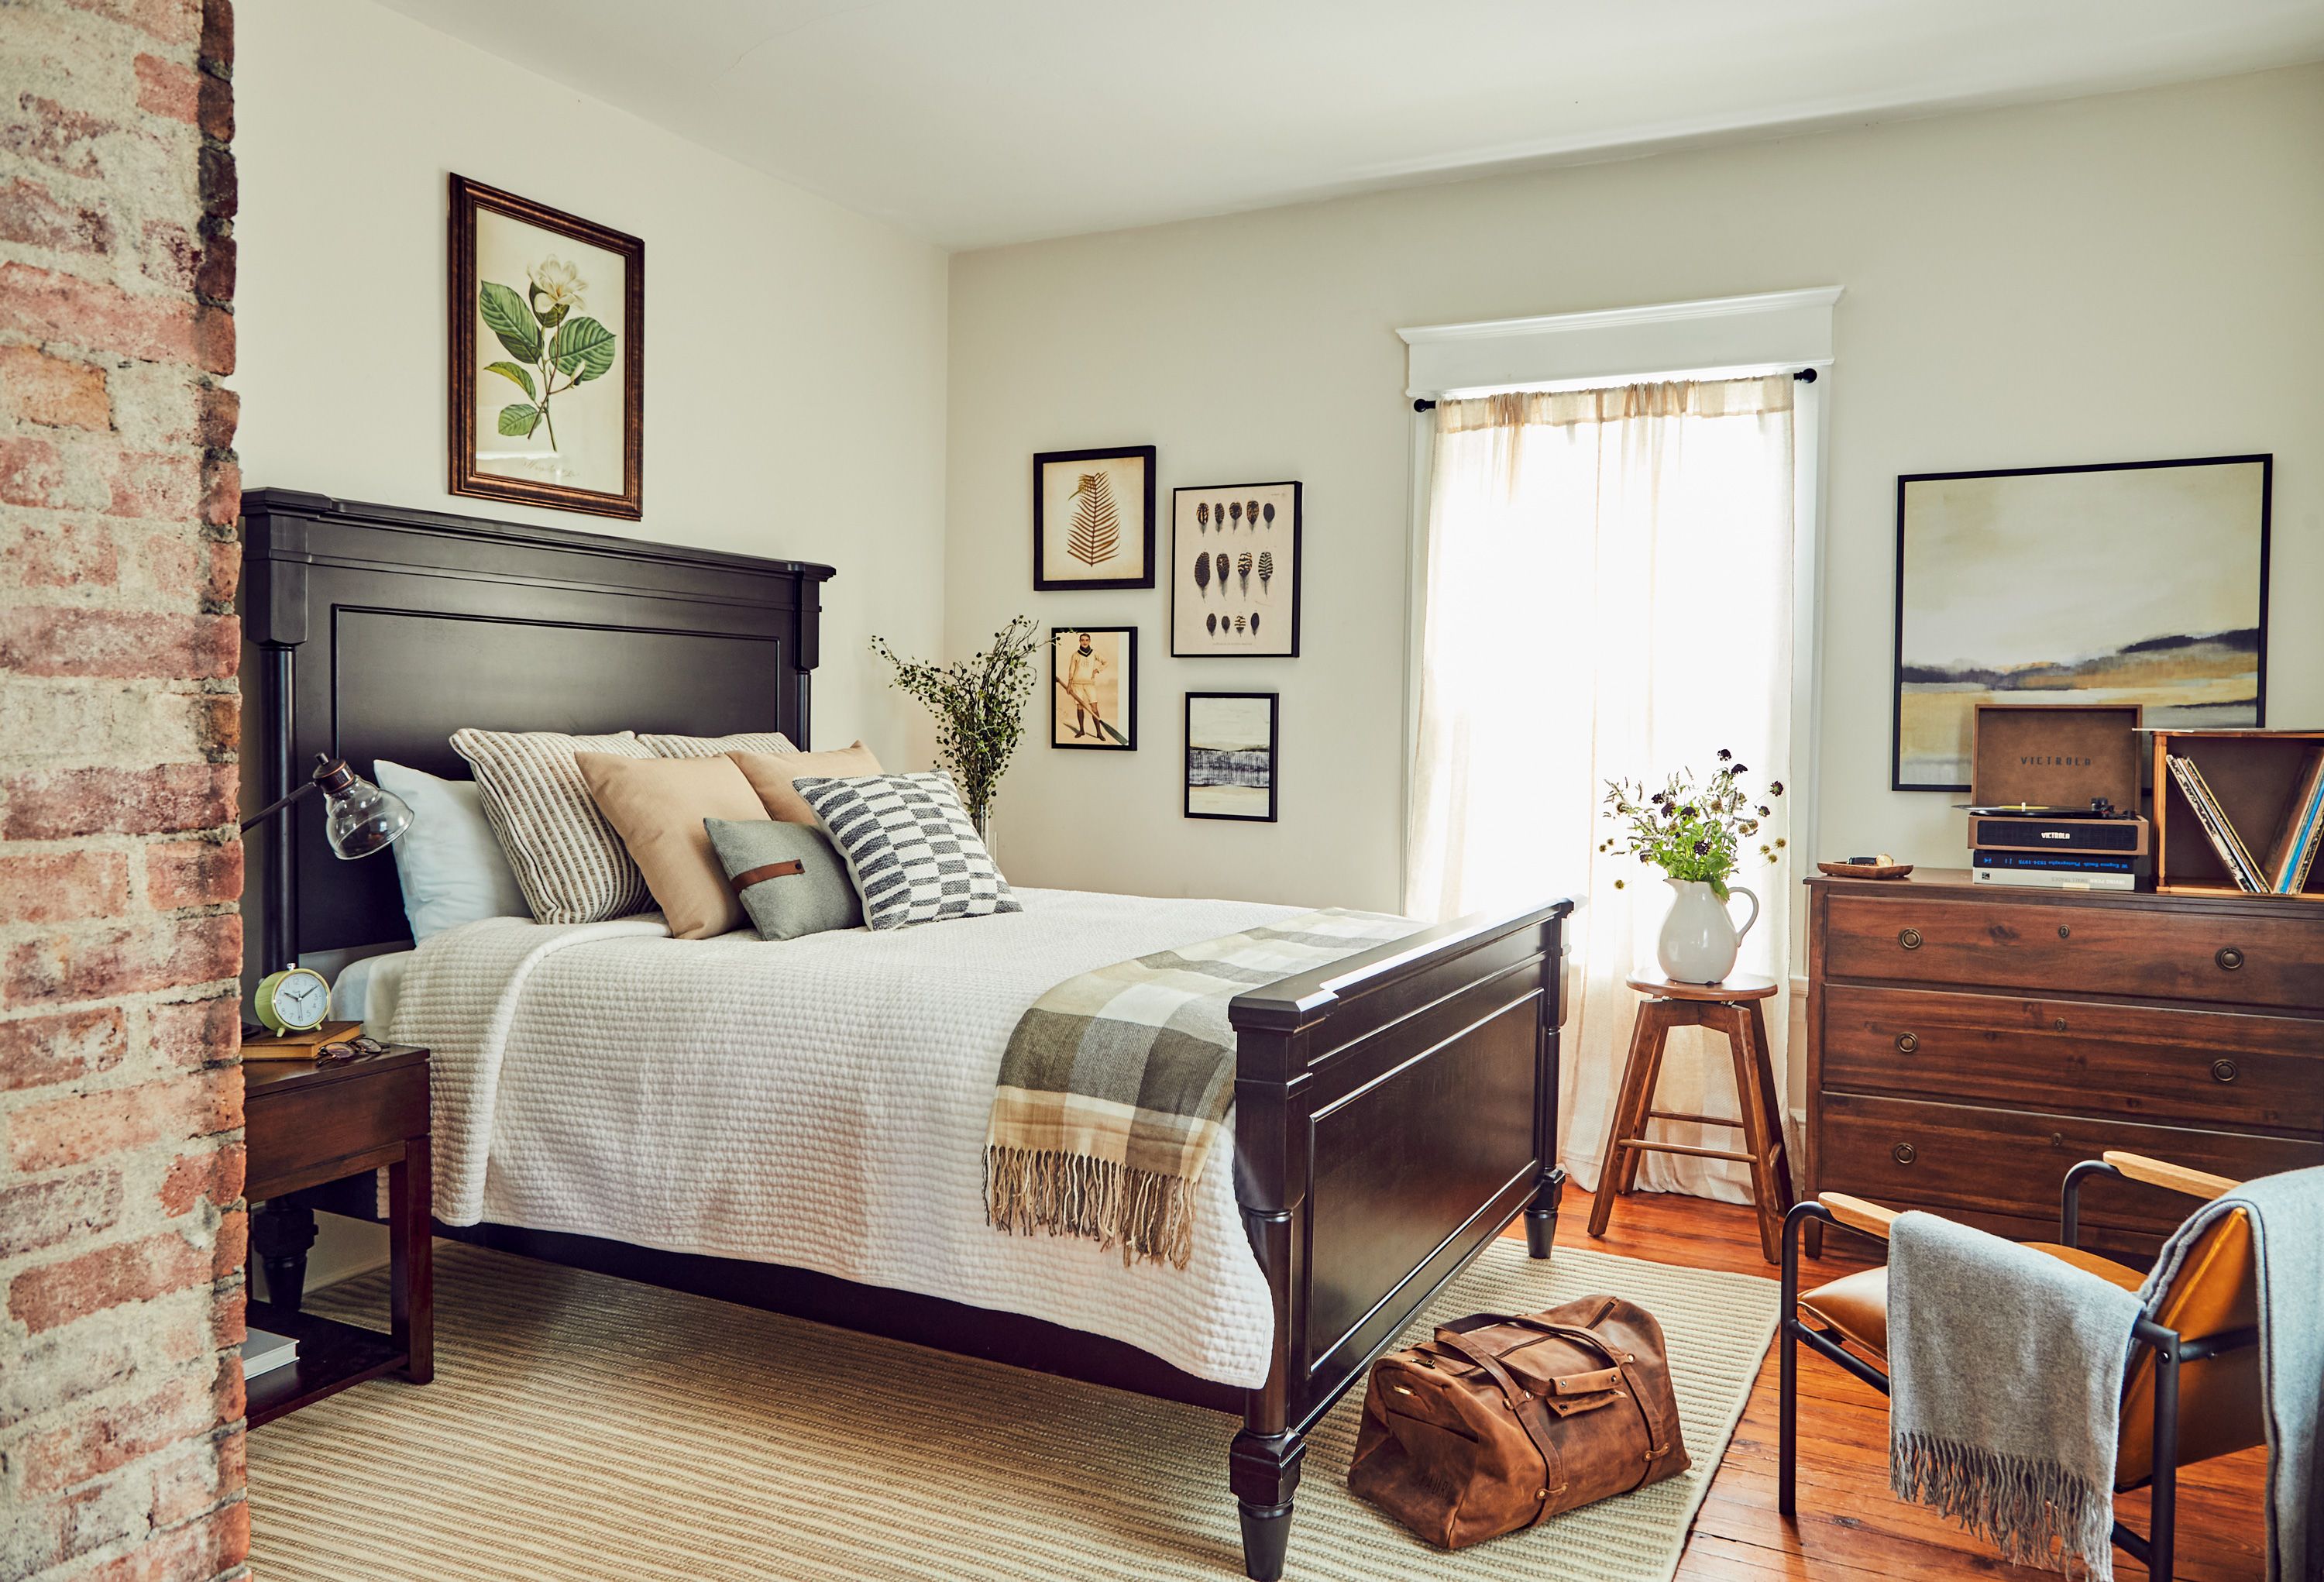 22+ Guest Bedroom Sleeping Ideas Images – Bedroom Designs & Ideas